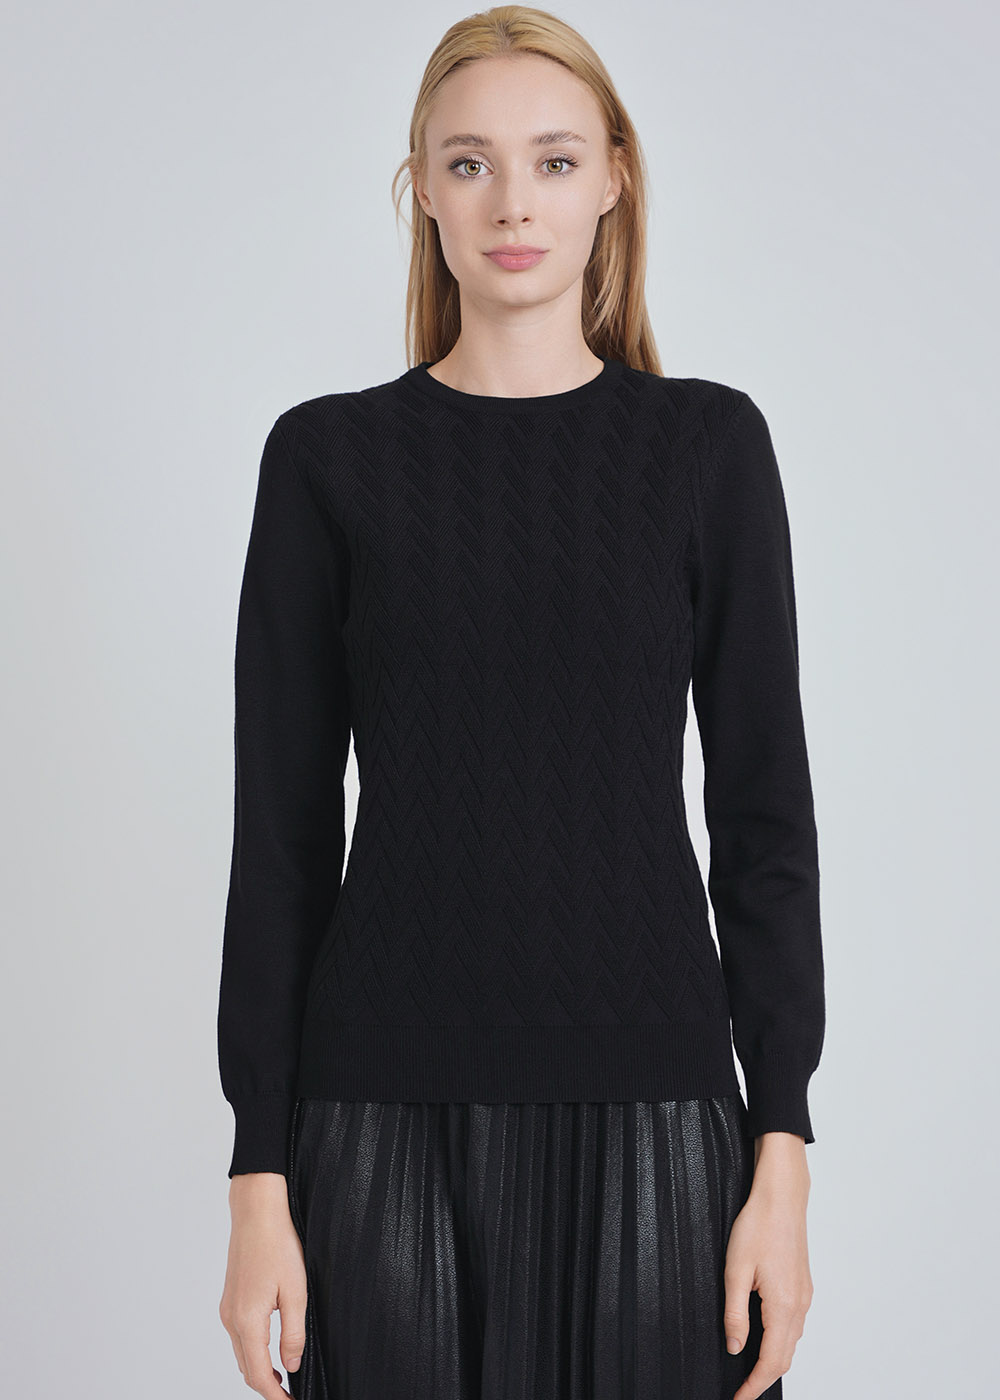 Black Sweater: Relaxed Knit, Effortless Look